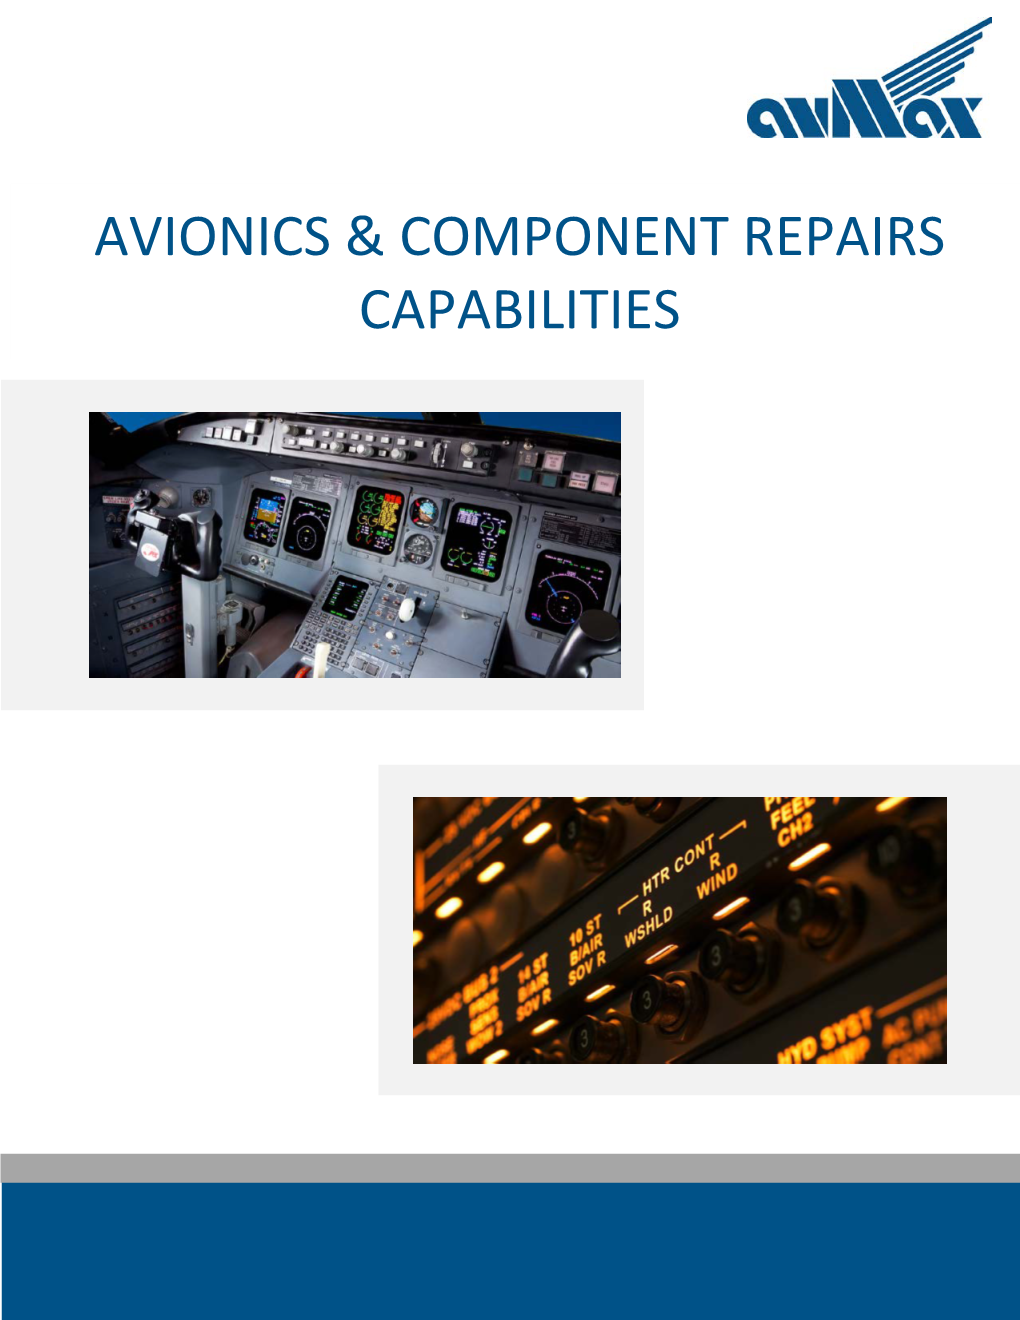 Avionics & Component Repairs Capabilities